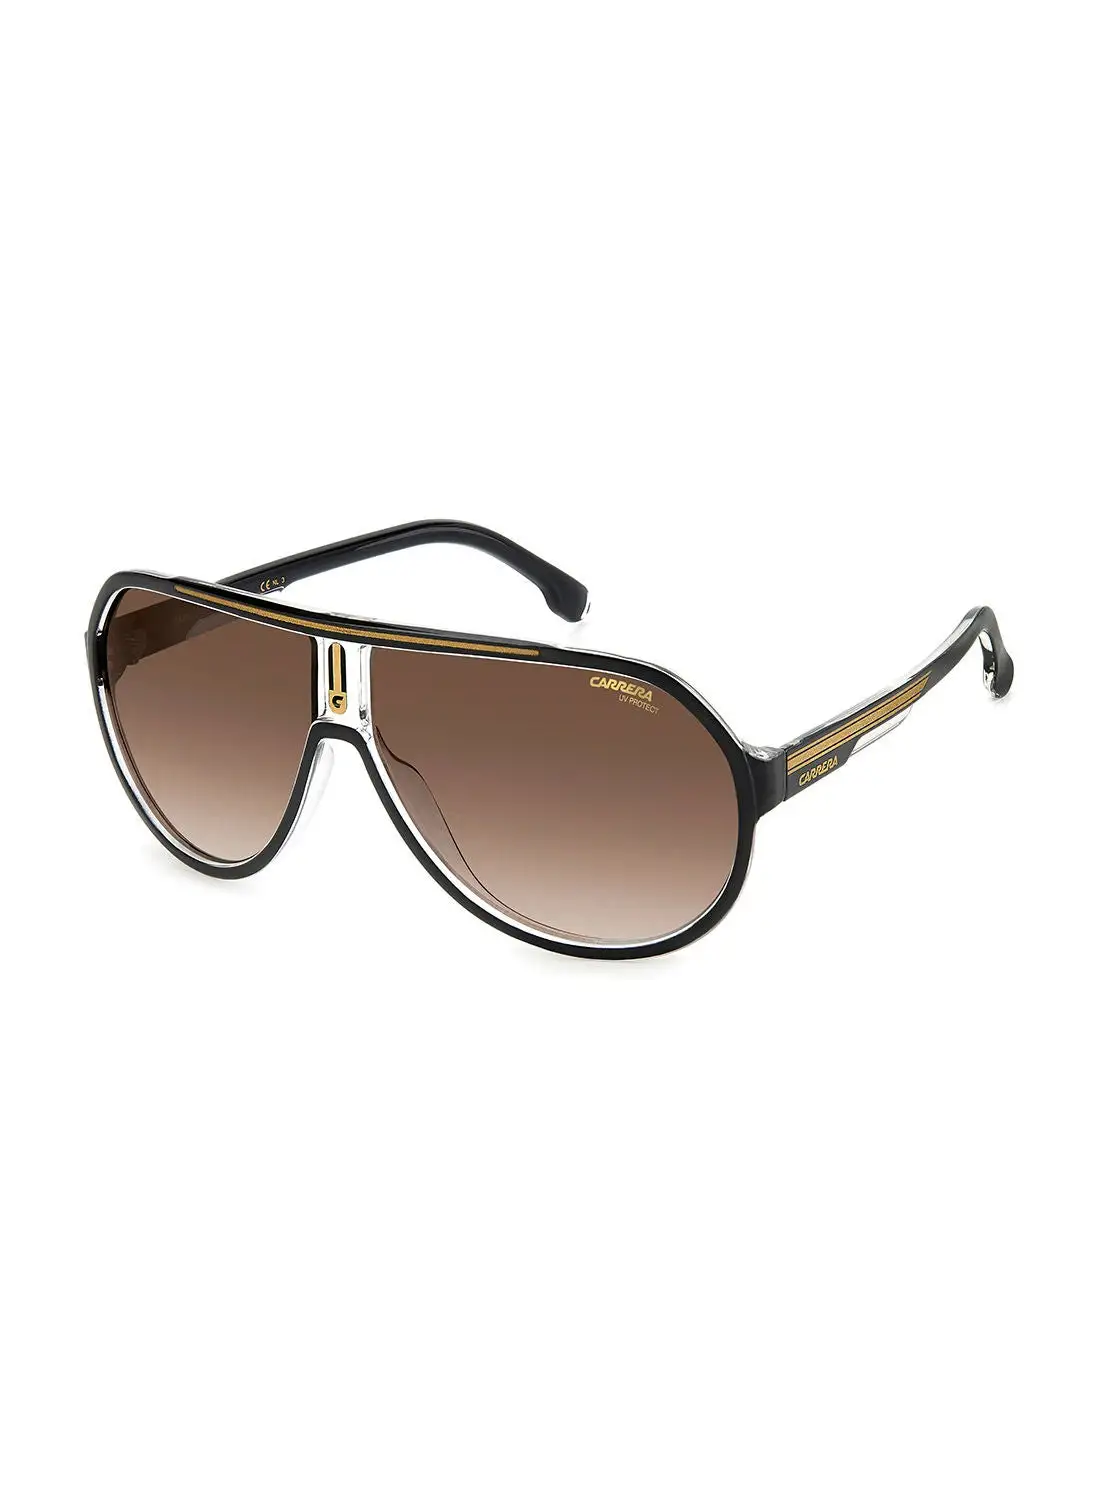 Carrera Men's UV Protection Pilot Sunglasses - Carrera 1057/S Black/Gold 64 - Lens Size: 64 Mm